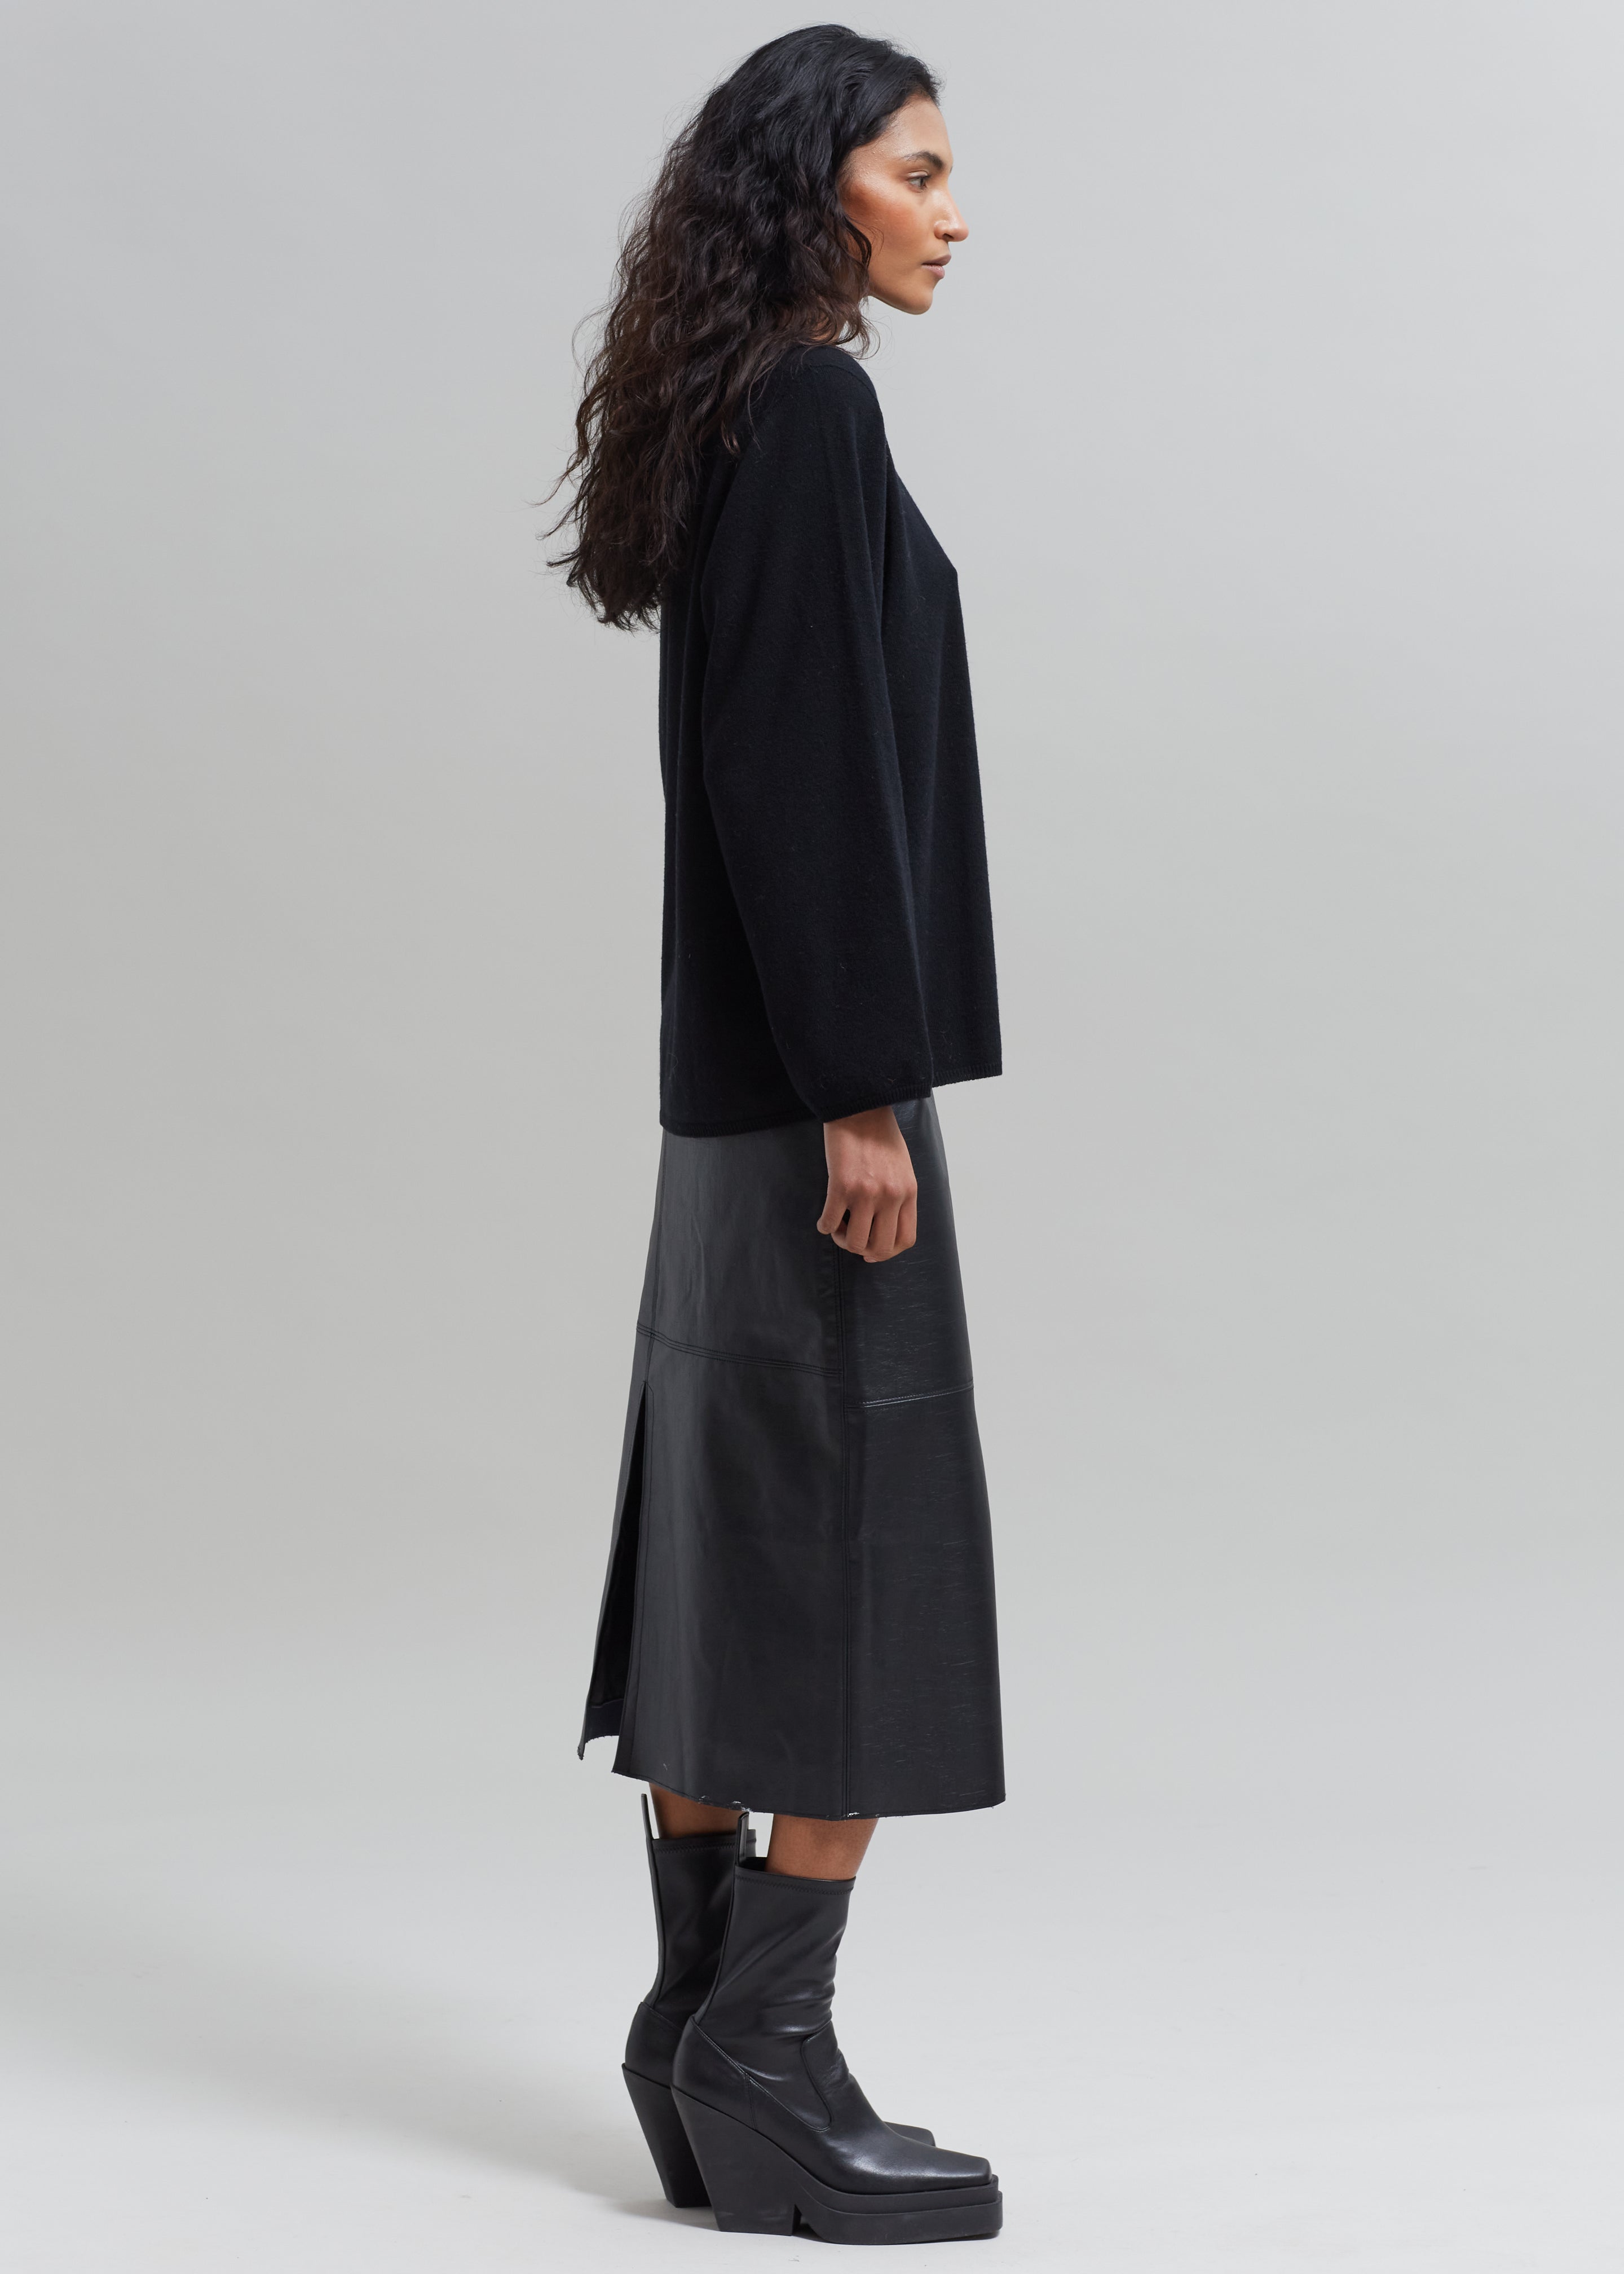 Manyne Faux Leather Pencil Skirt - Black - 8